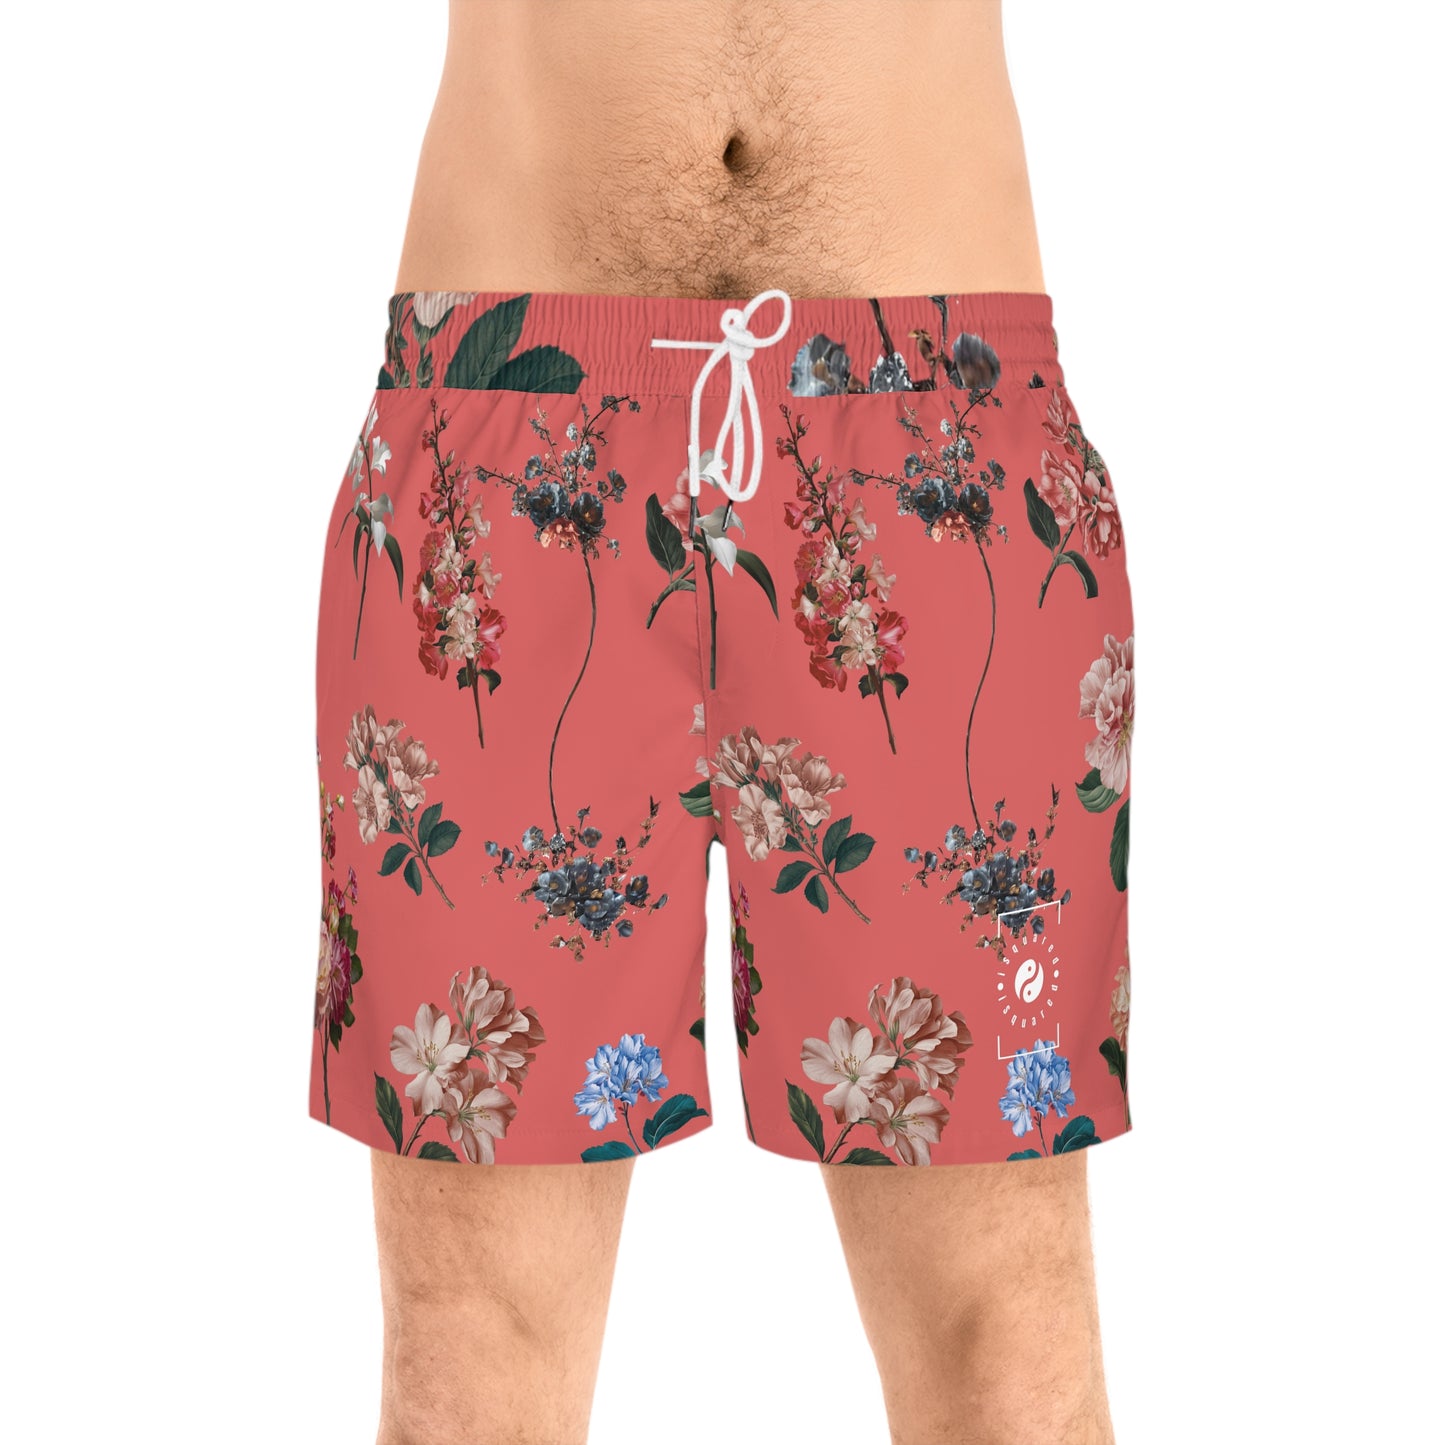 Botanicals on Coral - Swim Shorts (Mid-Length) for Men